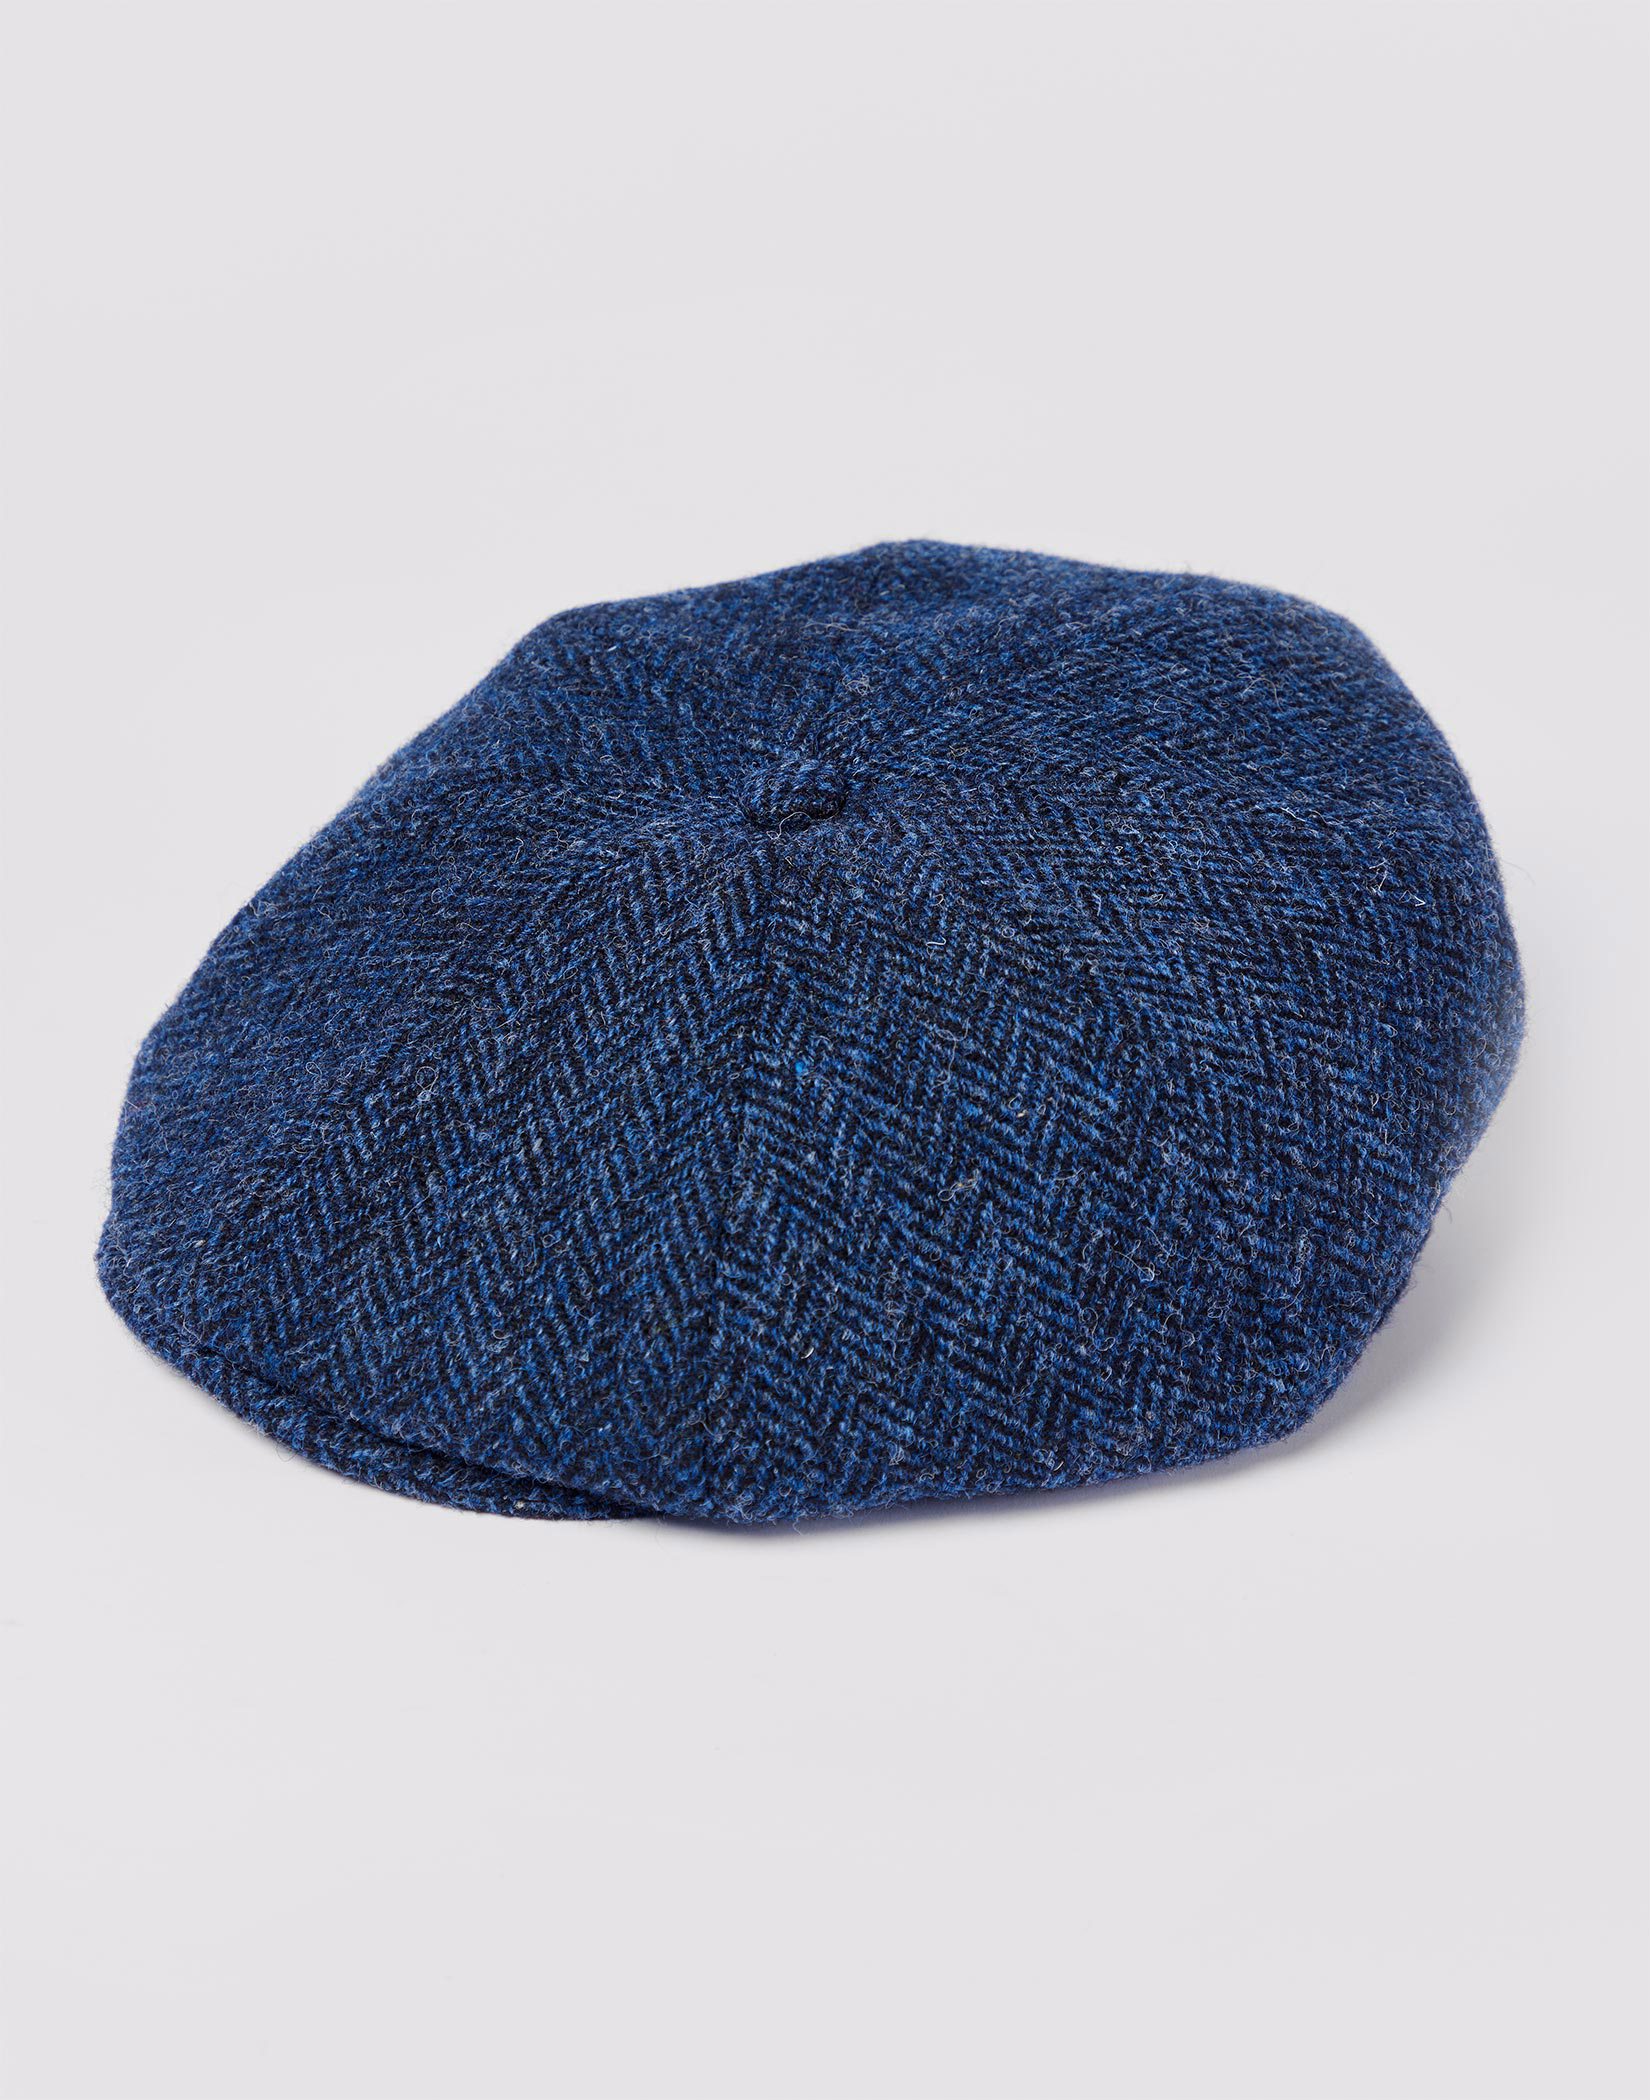 Newsboy Cap - Blue Tweed